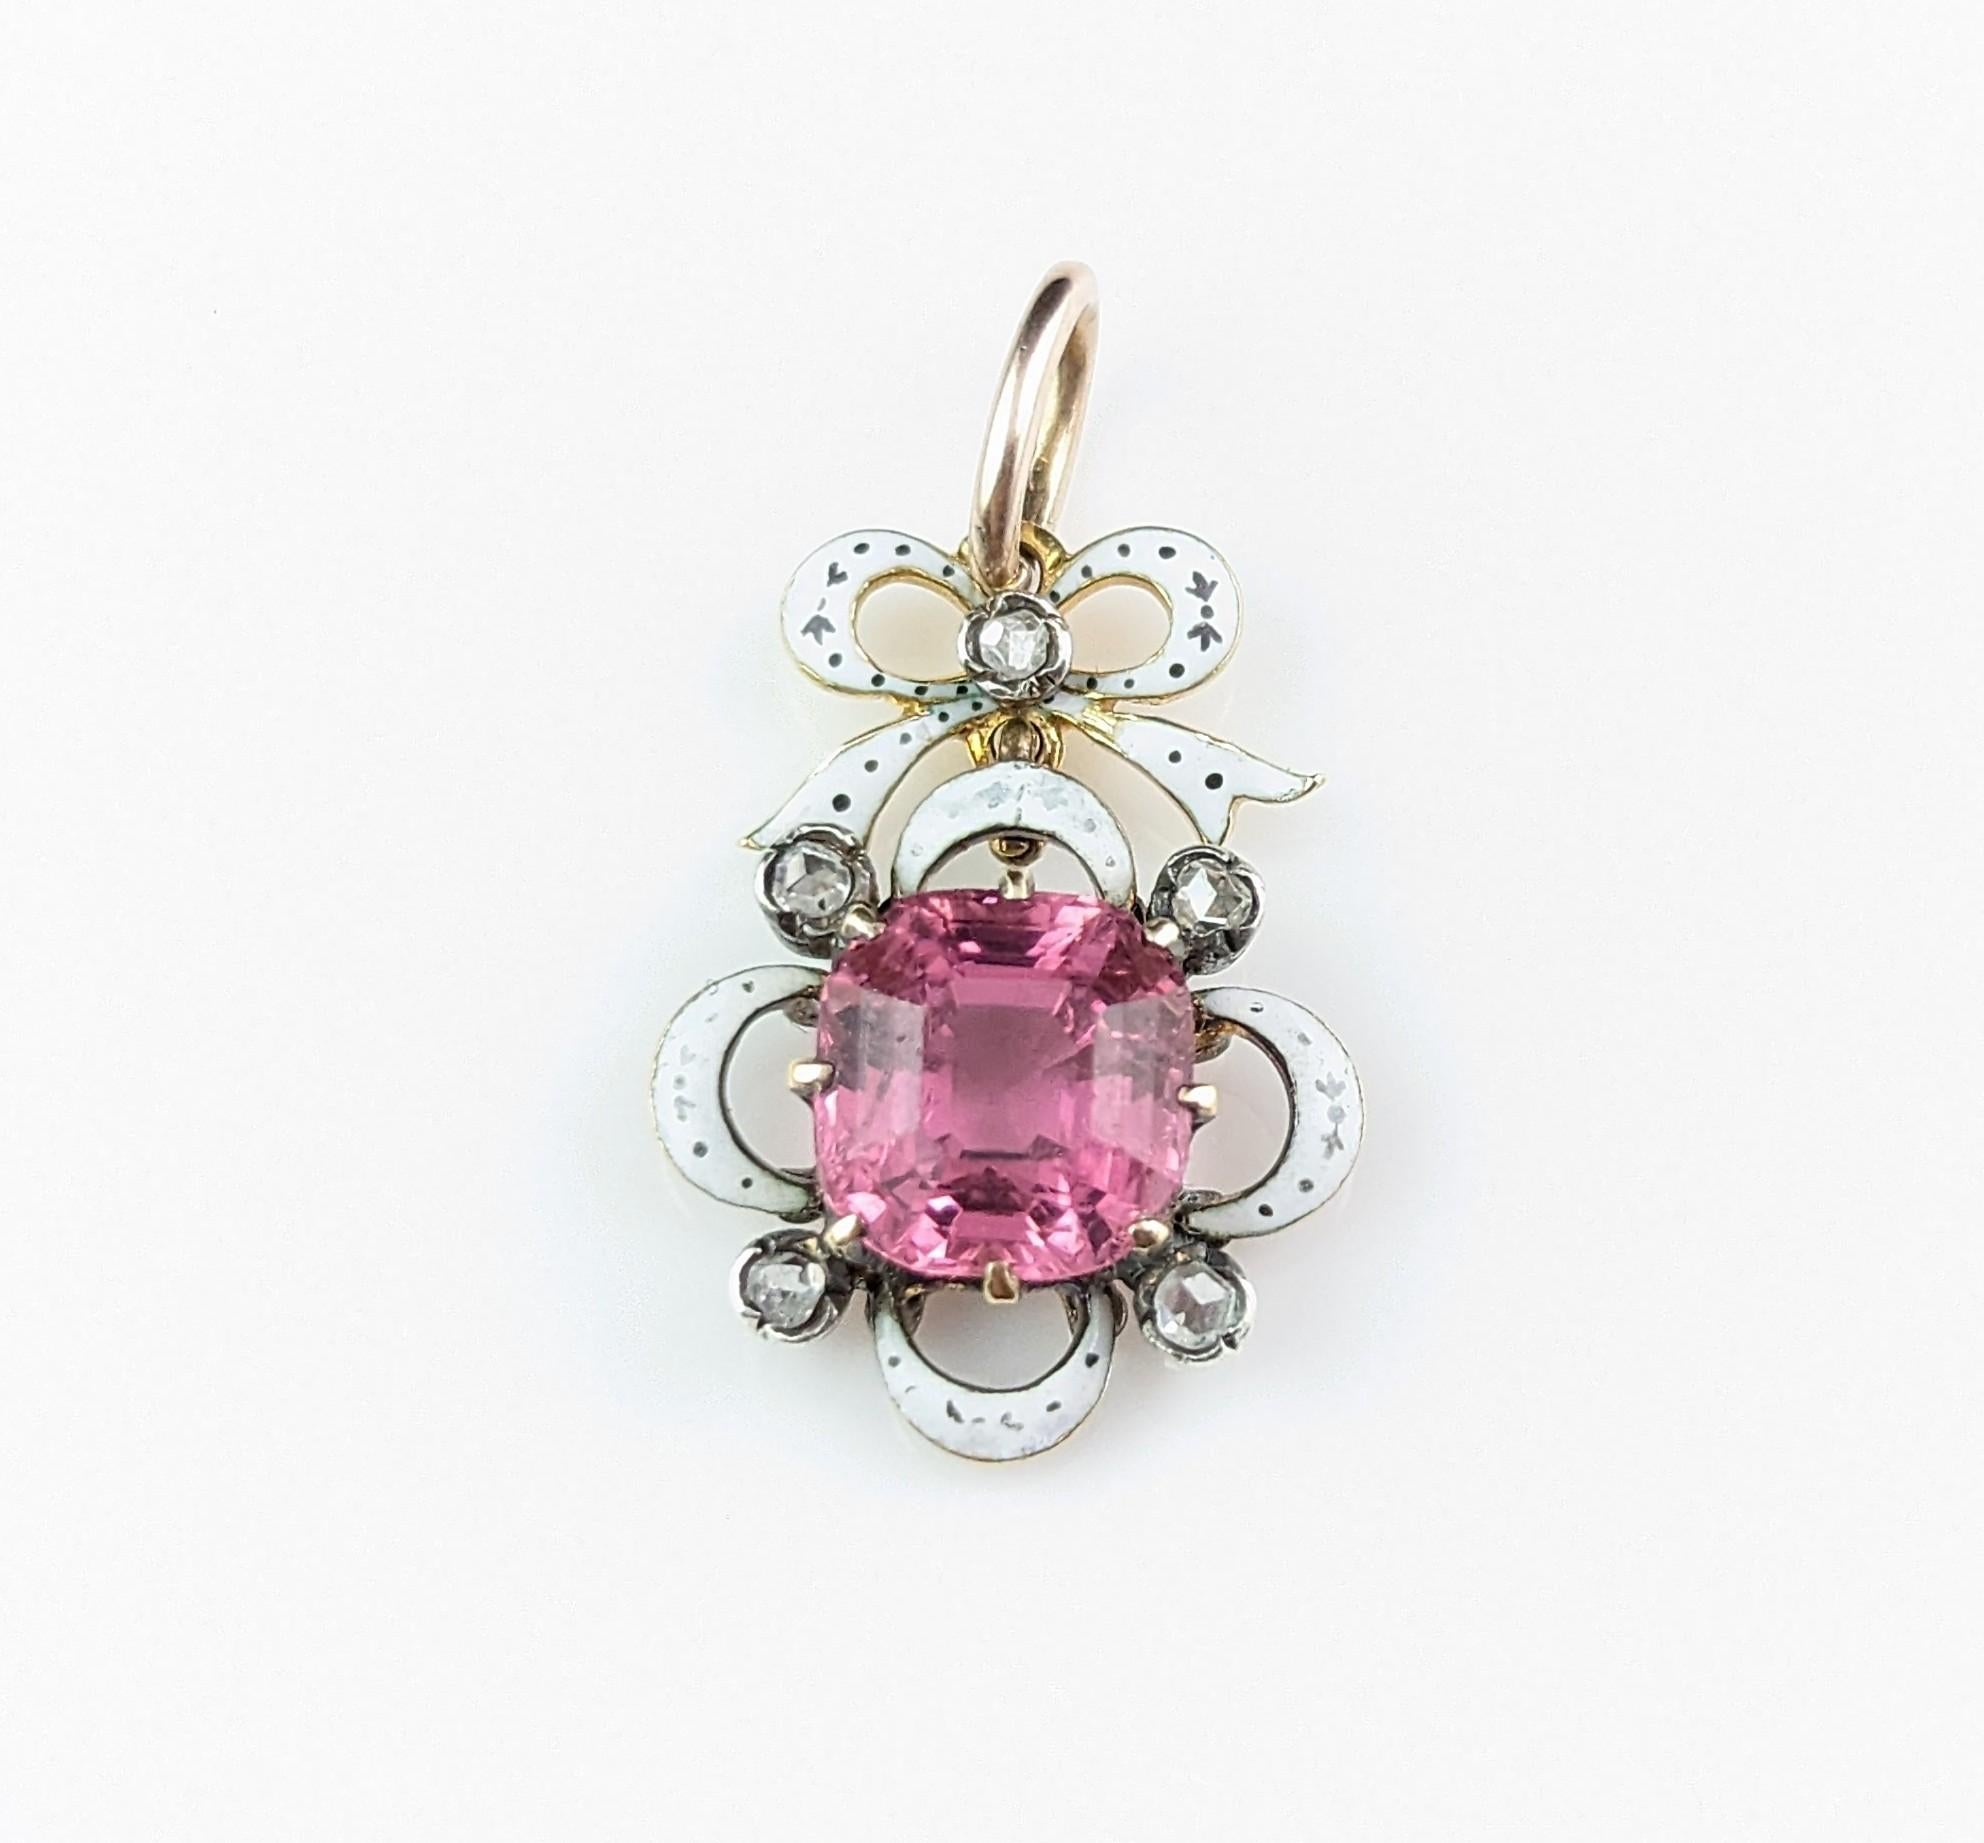 Antique Pink Tourmaline and Diamond Pendant, White and Black Enamel, 18k Gold 4